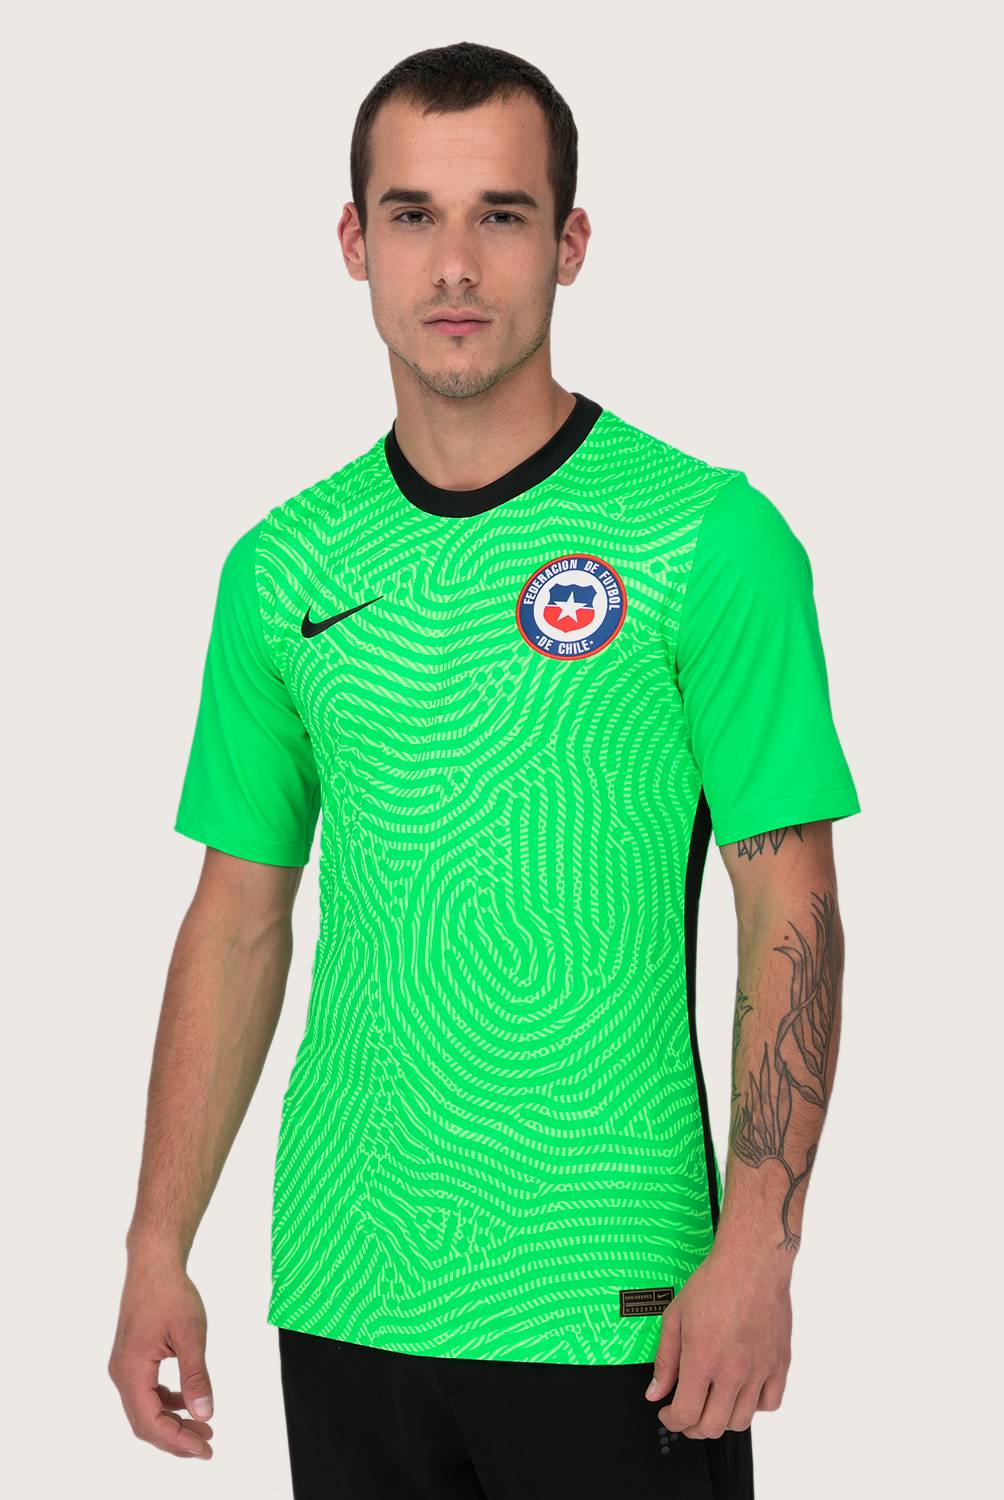 NIKE - Camiseta Chile Hombre Arquero Fútbol Prematch